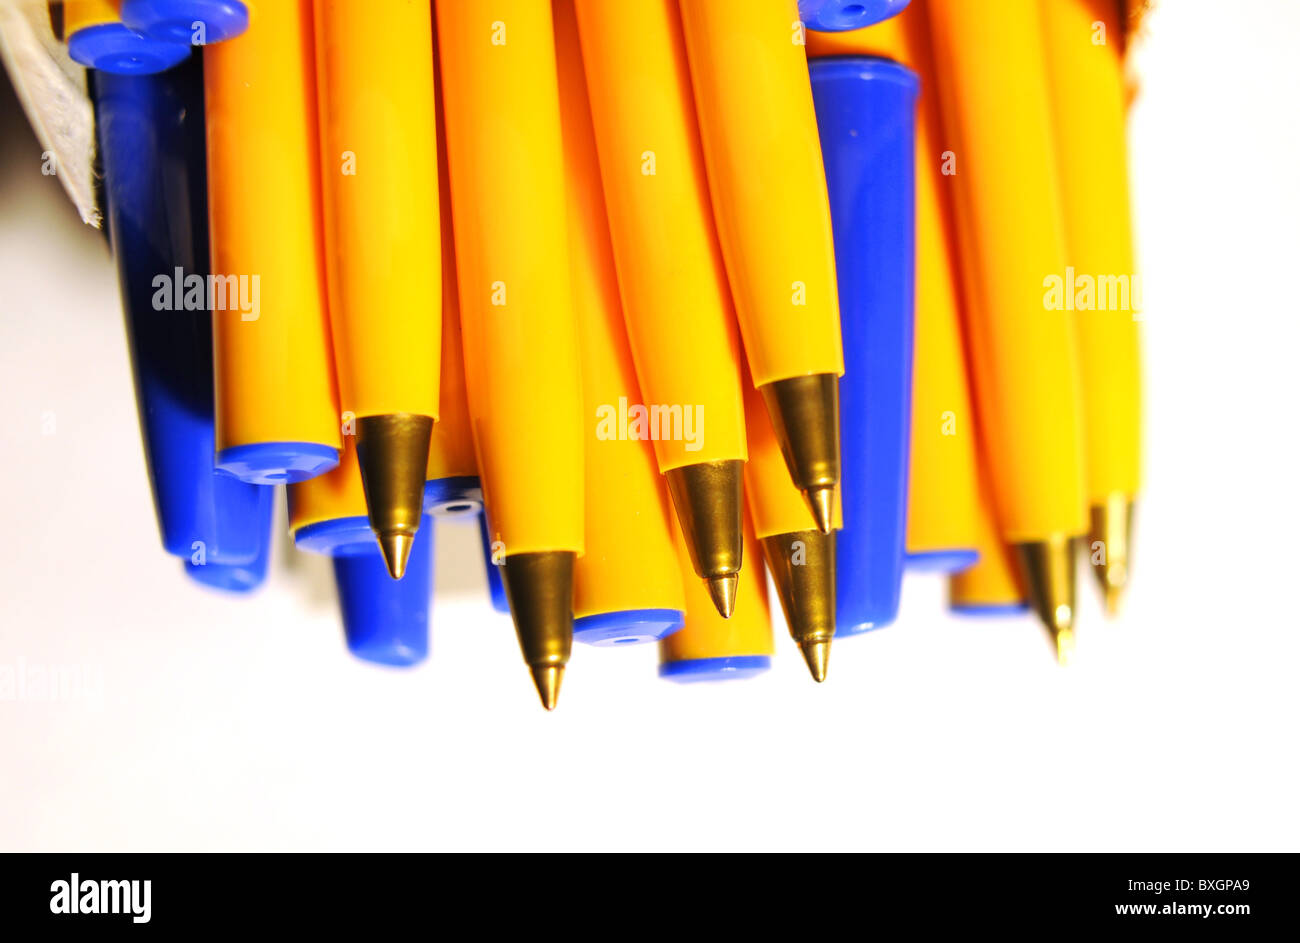 Office stationary and equipment biro pens Stock Photo